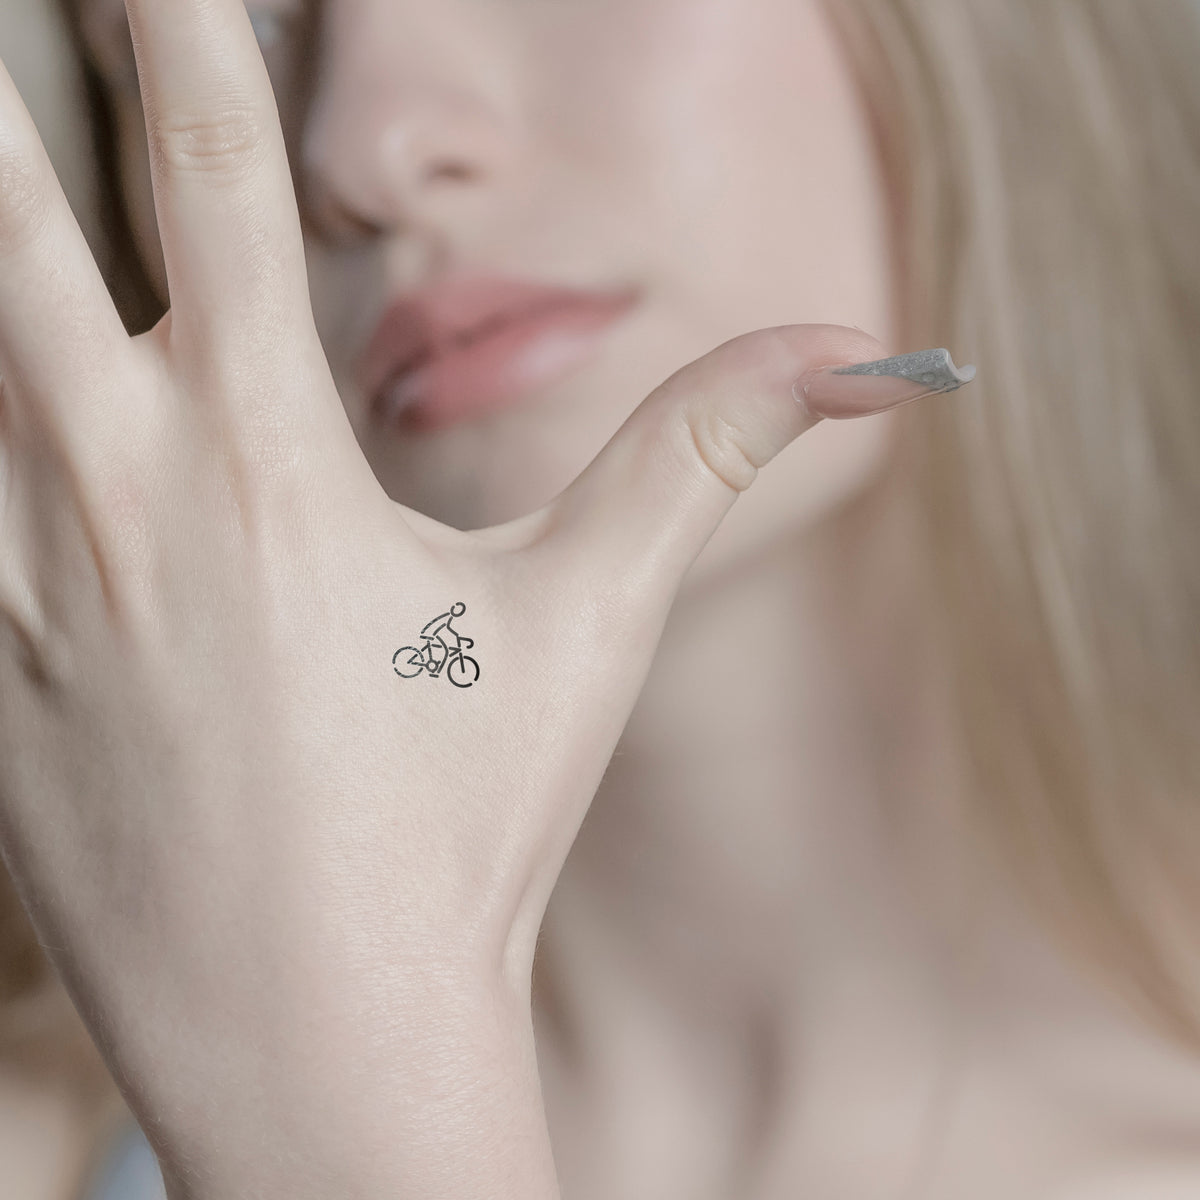 Pin by Ana Schiavinatto on tatoo | Bike tattoos, Cycling tattoo, Bicycle  tattoo